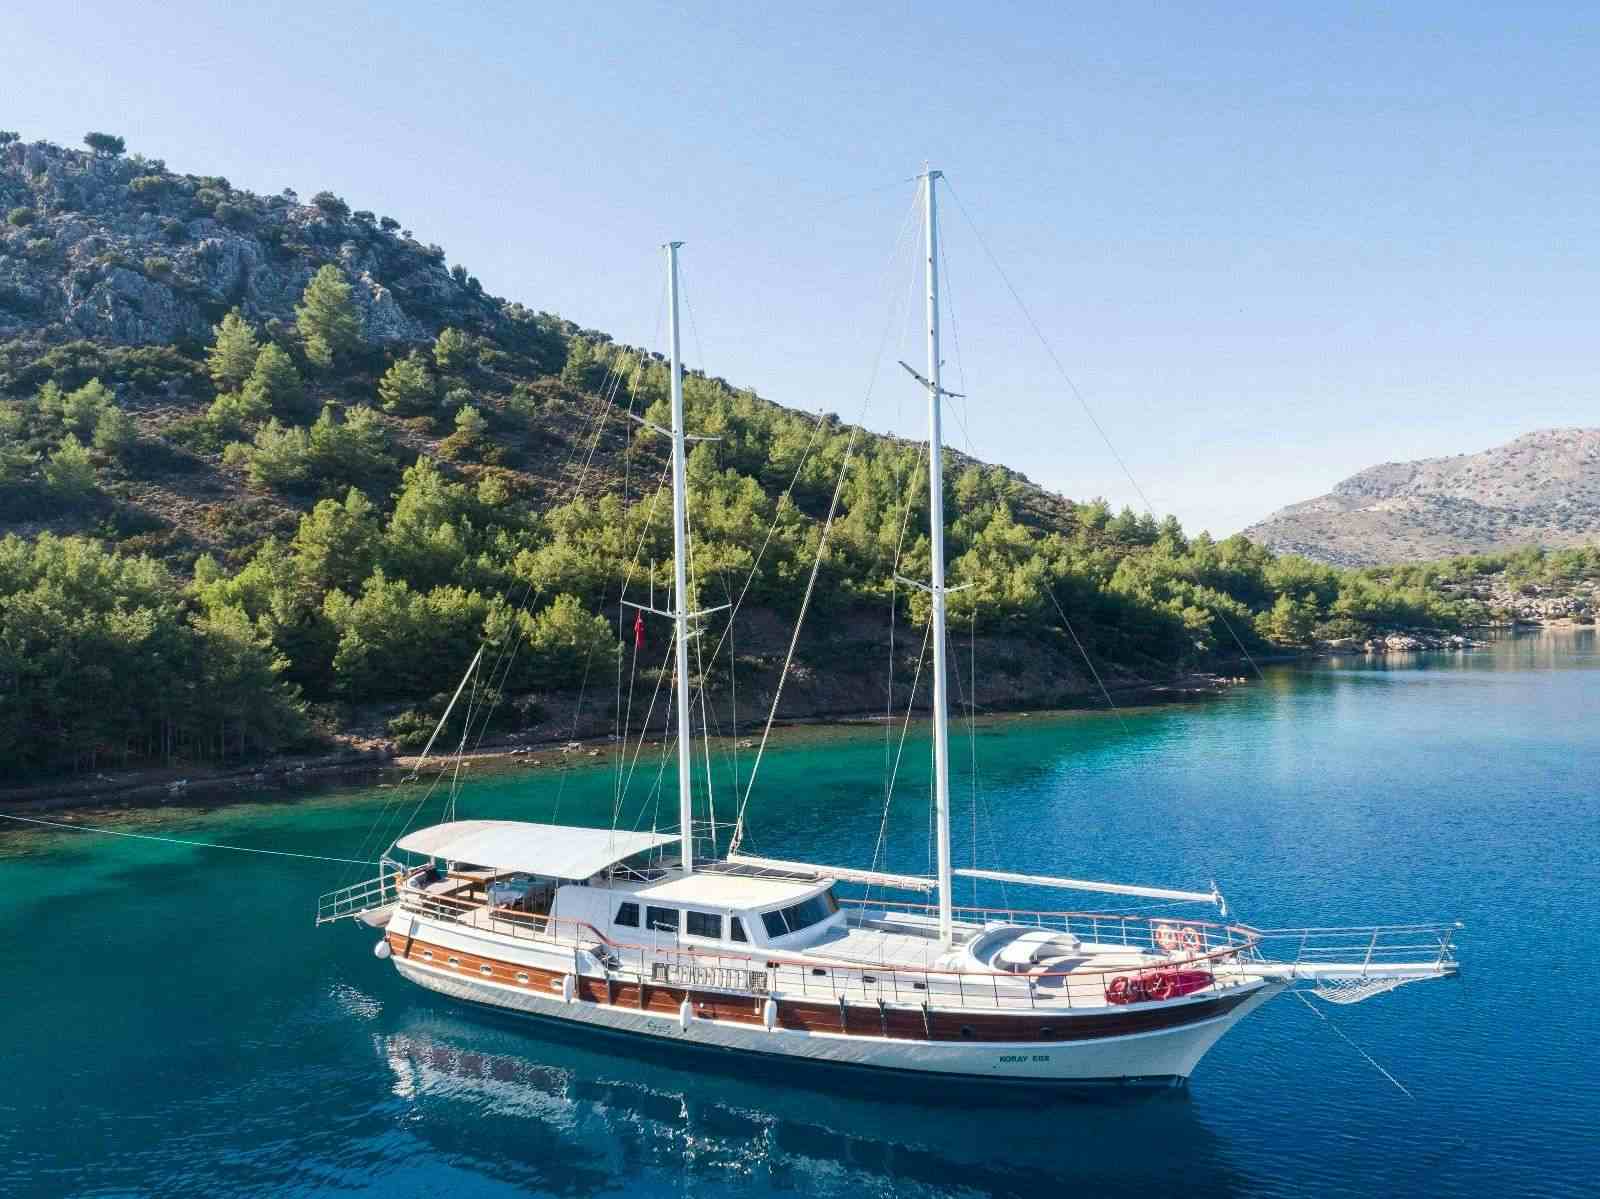 koray ege - Yacht Charter Skiathos & Boat hire in Greece & Turkey 1